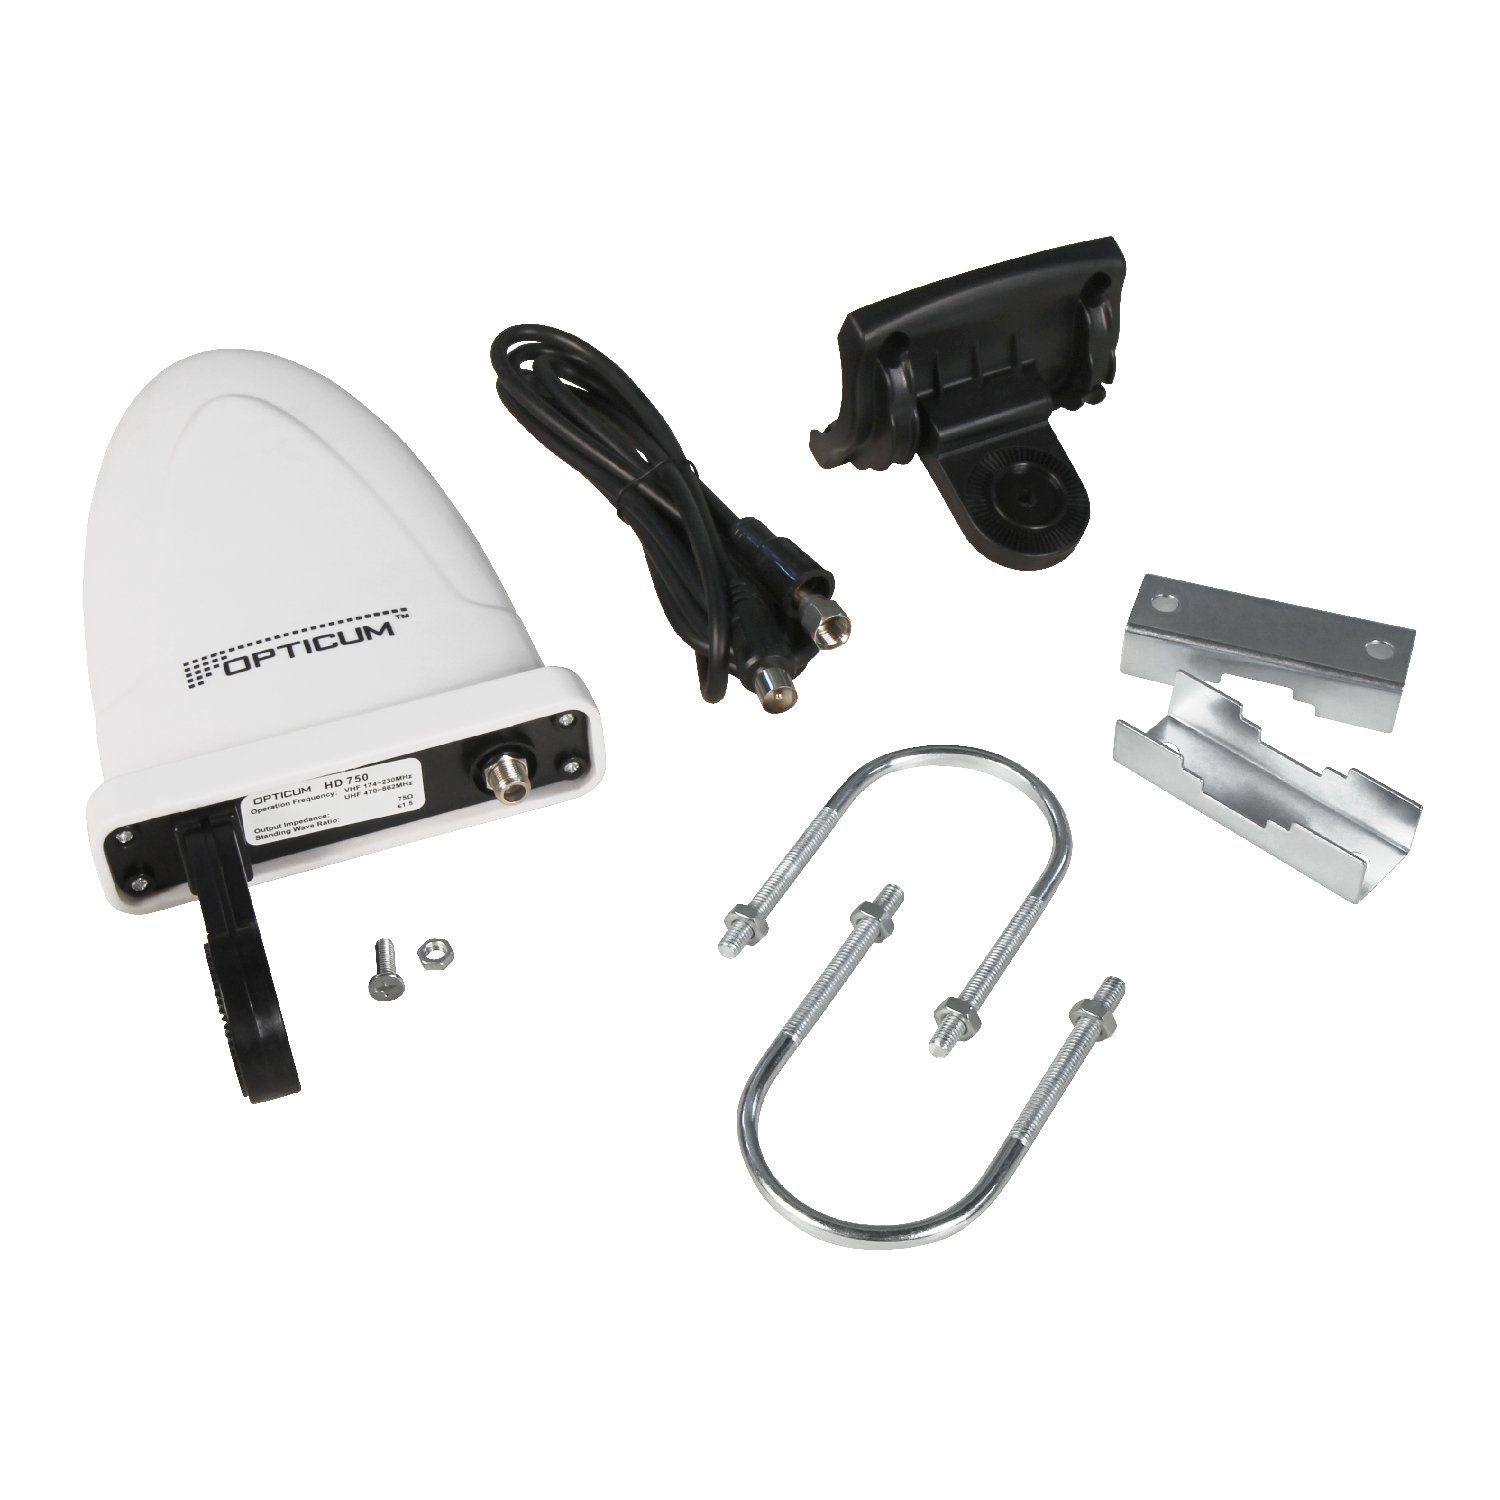 Rundfunkempfang für - 750 ideal Camping) - Antenne HD für outdoor DVB-T/T2 DVB-T2 HD DVB-T OPTIMA OPTICUM RED & Receiver (Antenne